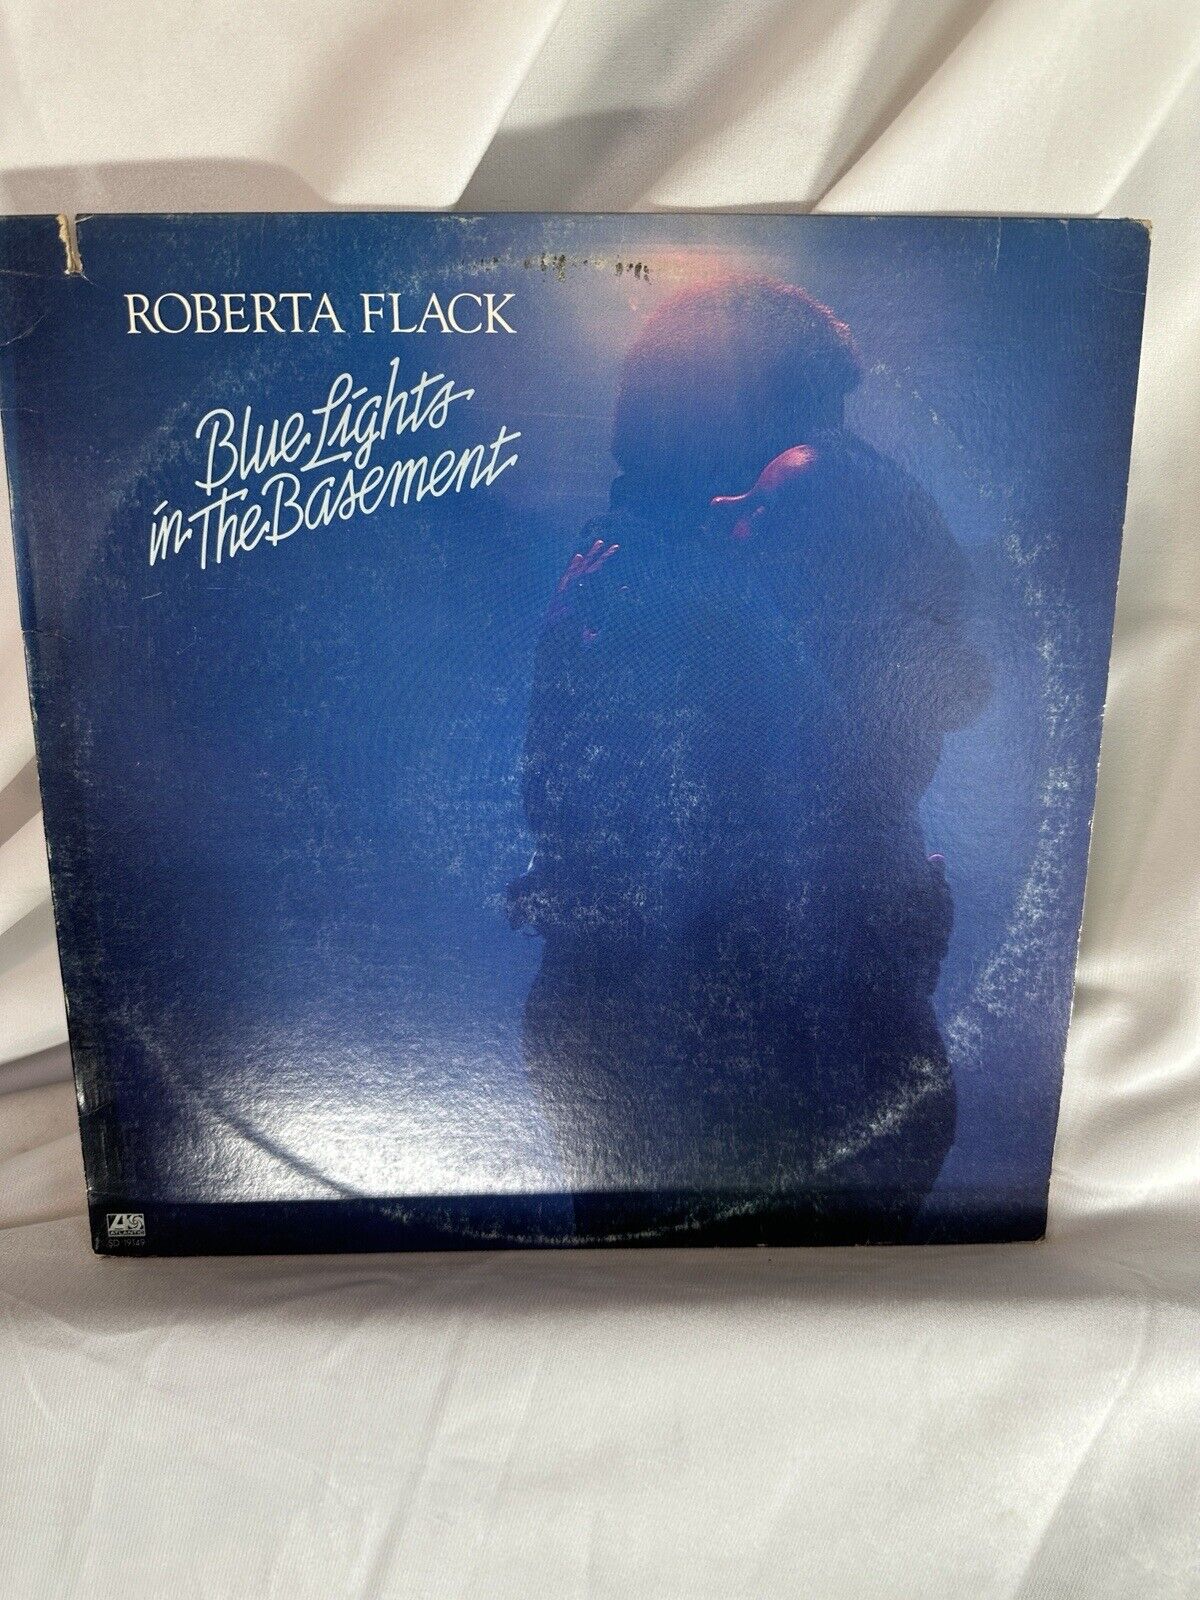 Roberta Flack Blue Lights In The Basement Atlantic LP Vinyl Record